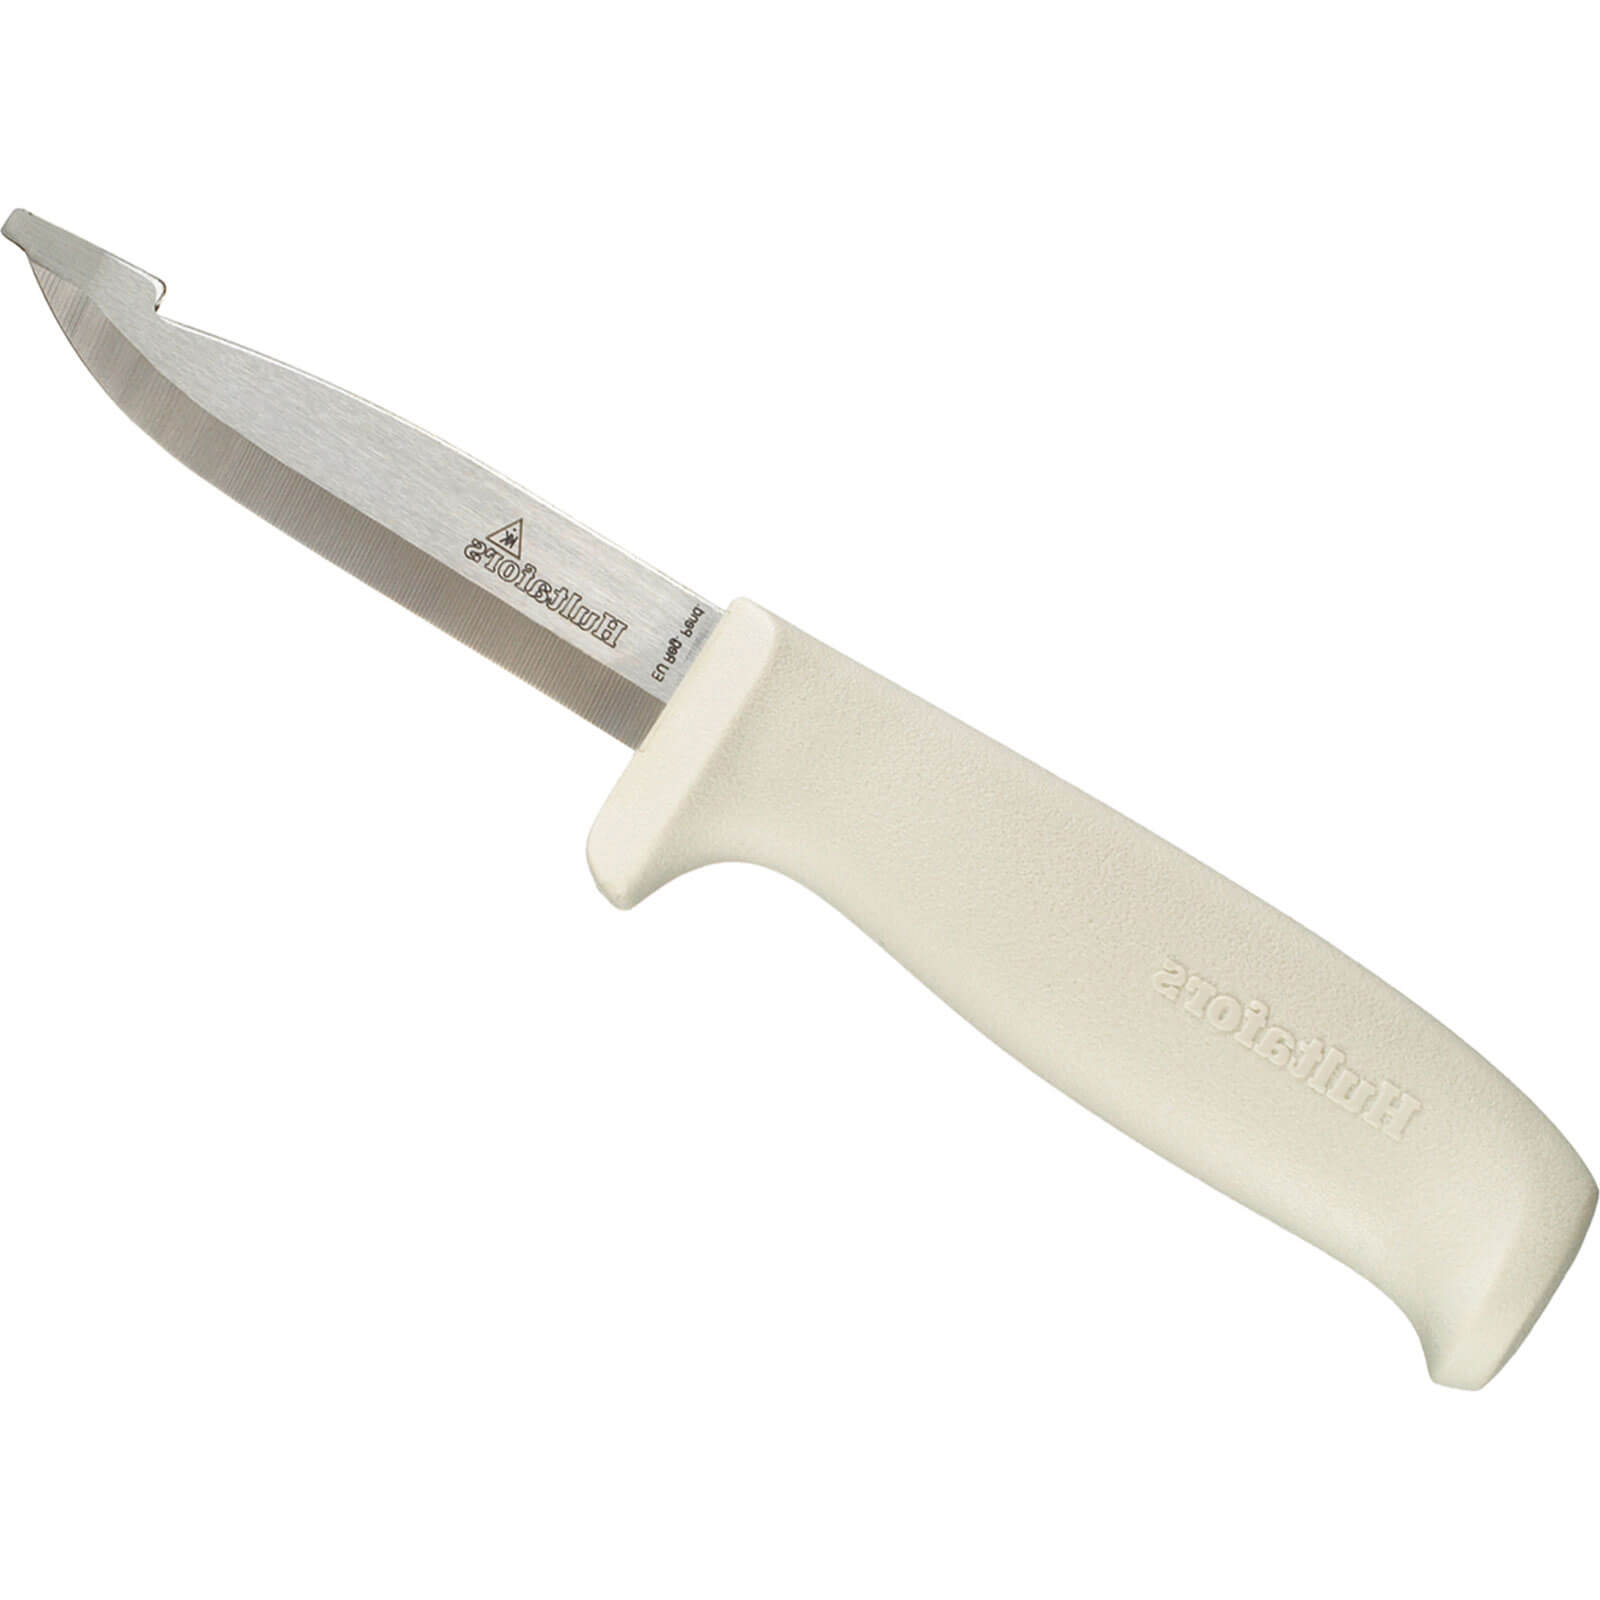 Hultafors Painters Knife 93mm Blade